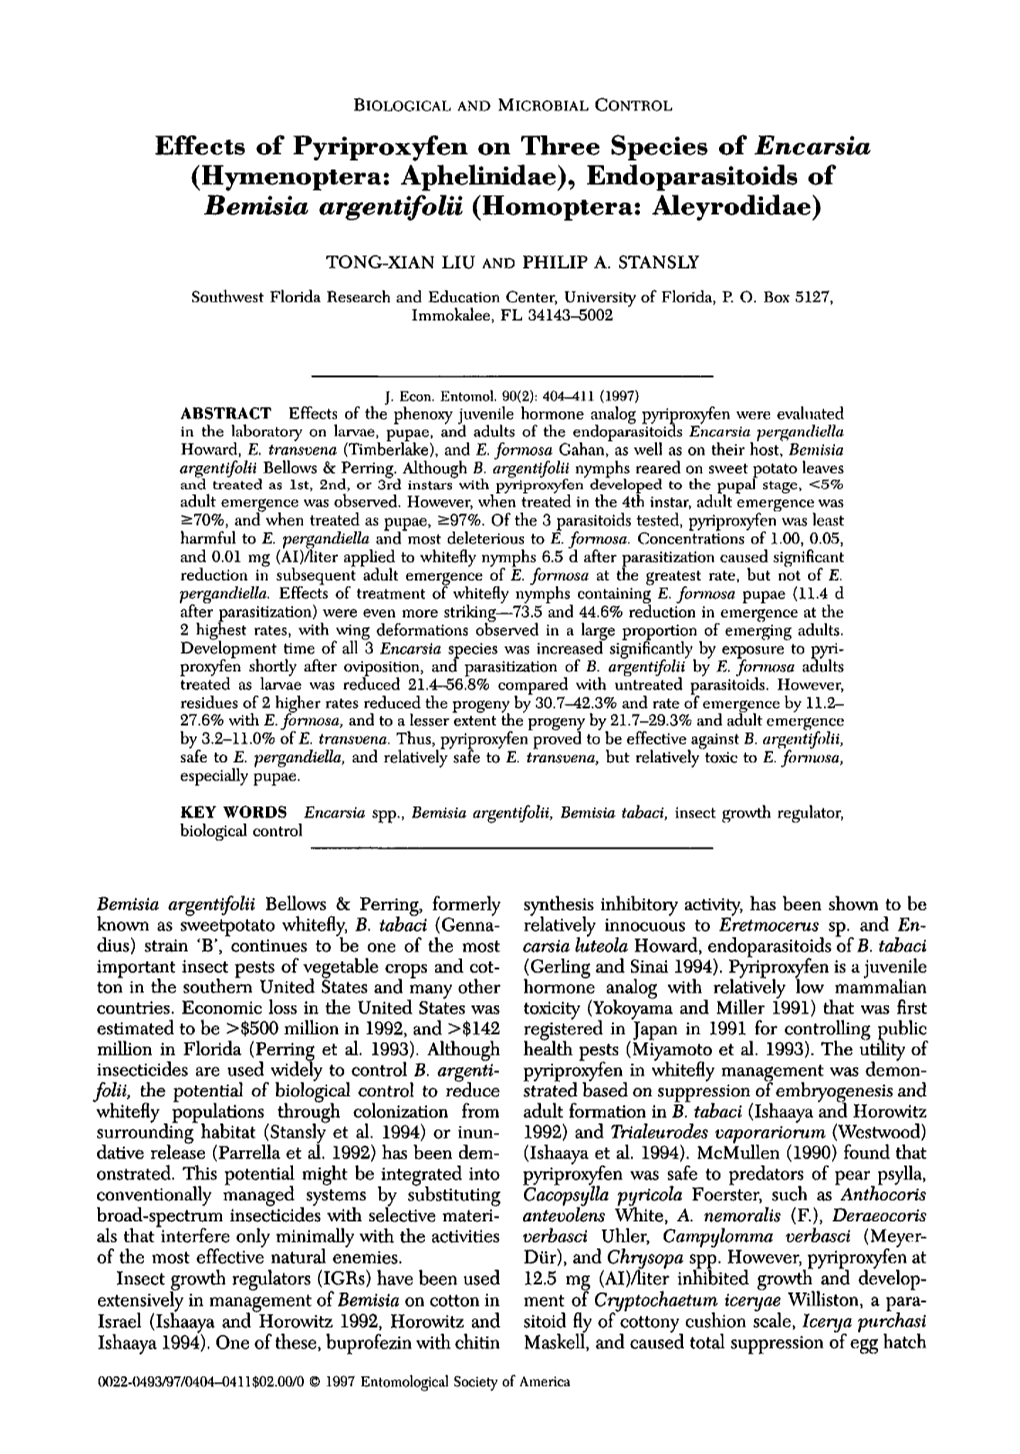 Effects of Pyriproxyfen on Three Species of Encarsia (Hymenoptera: Aphelinidae), Endoparasitoids of Bemisia Argentifolii (Homoptera: Aleyrodidae)